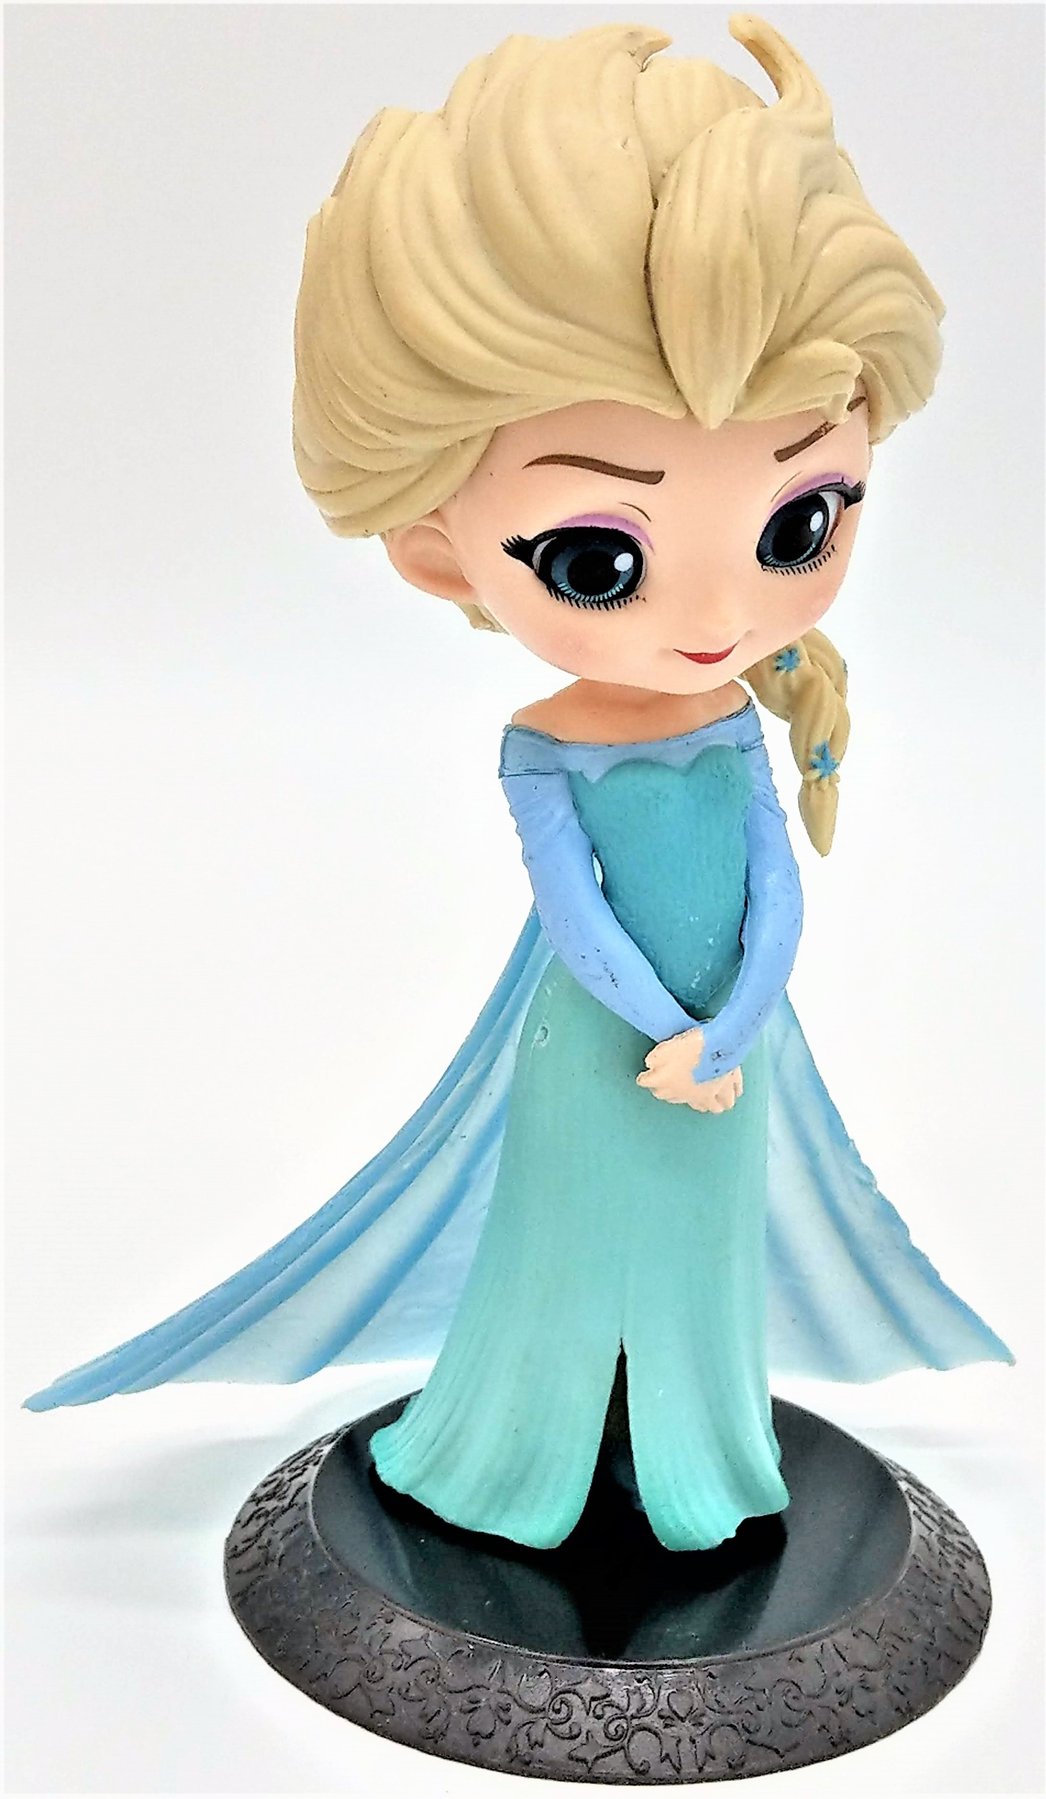 Shop Princess Elsa and Anna Figures at Prodigy Toys